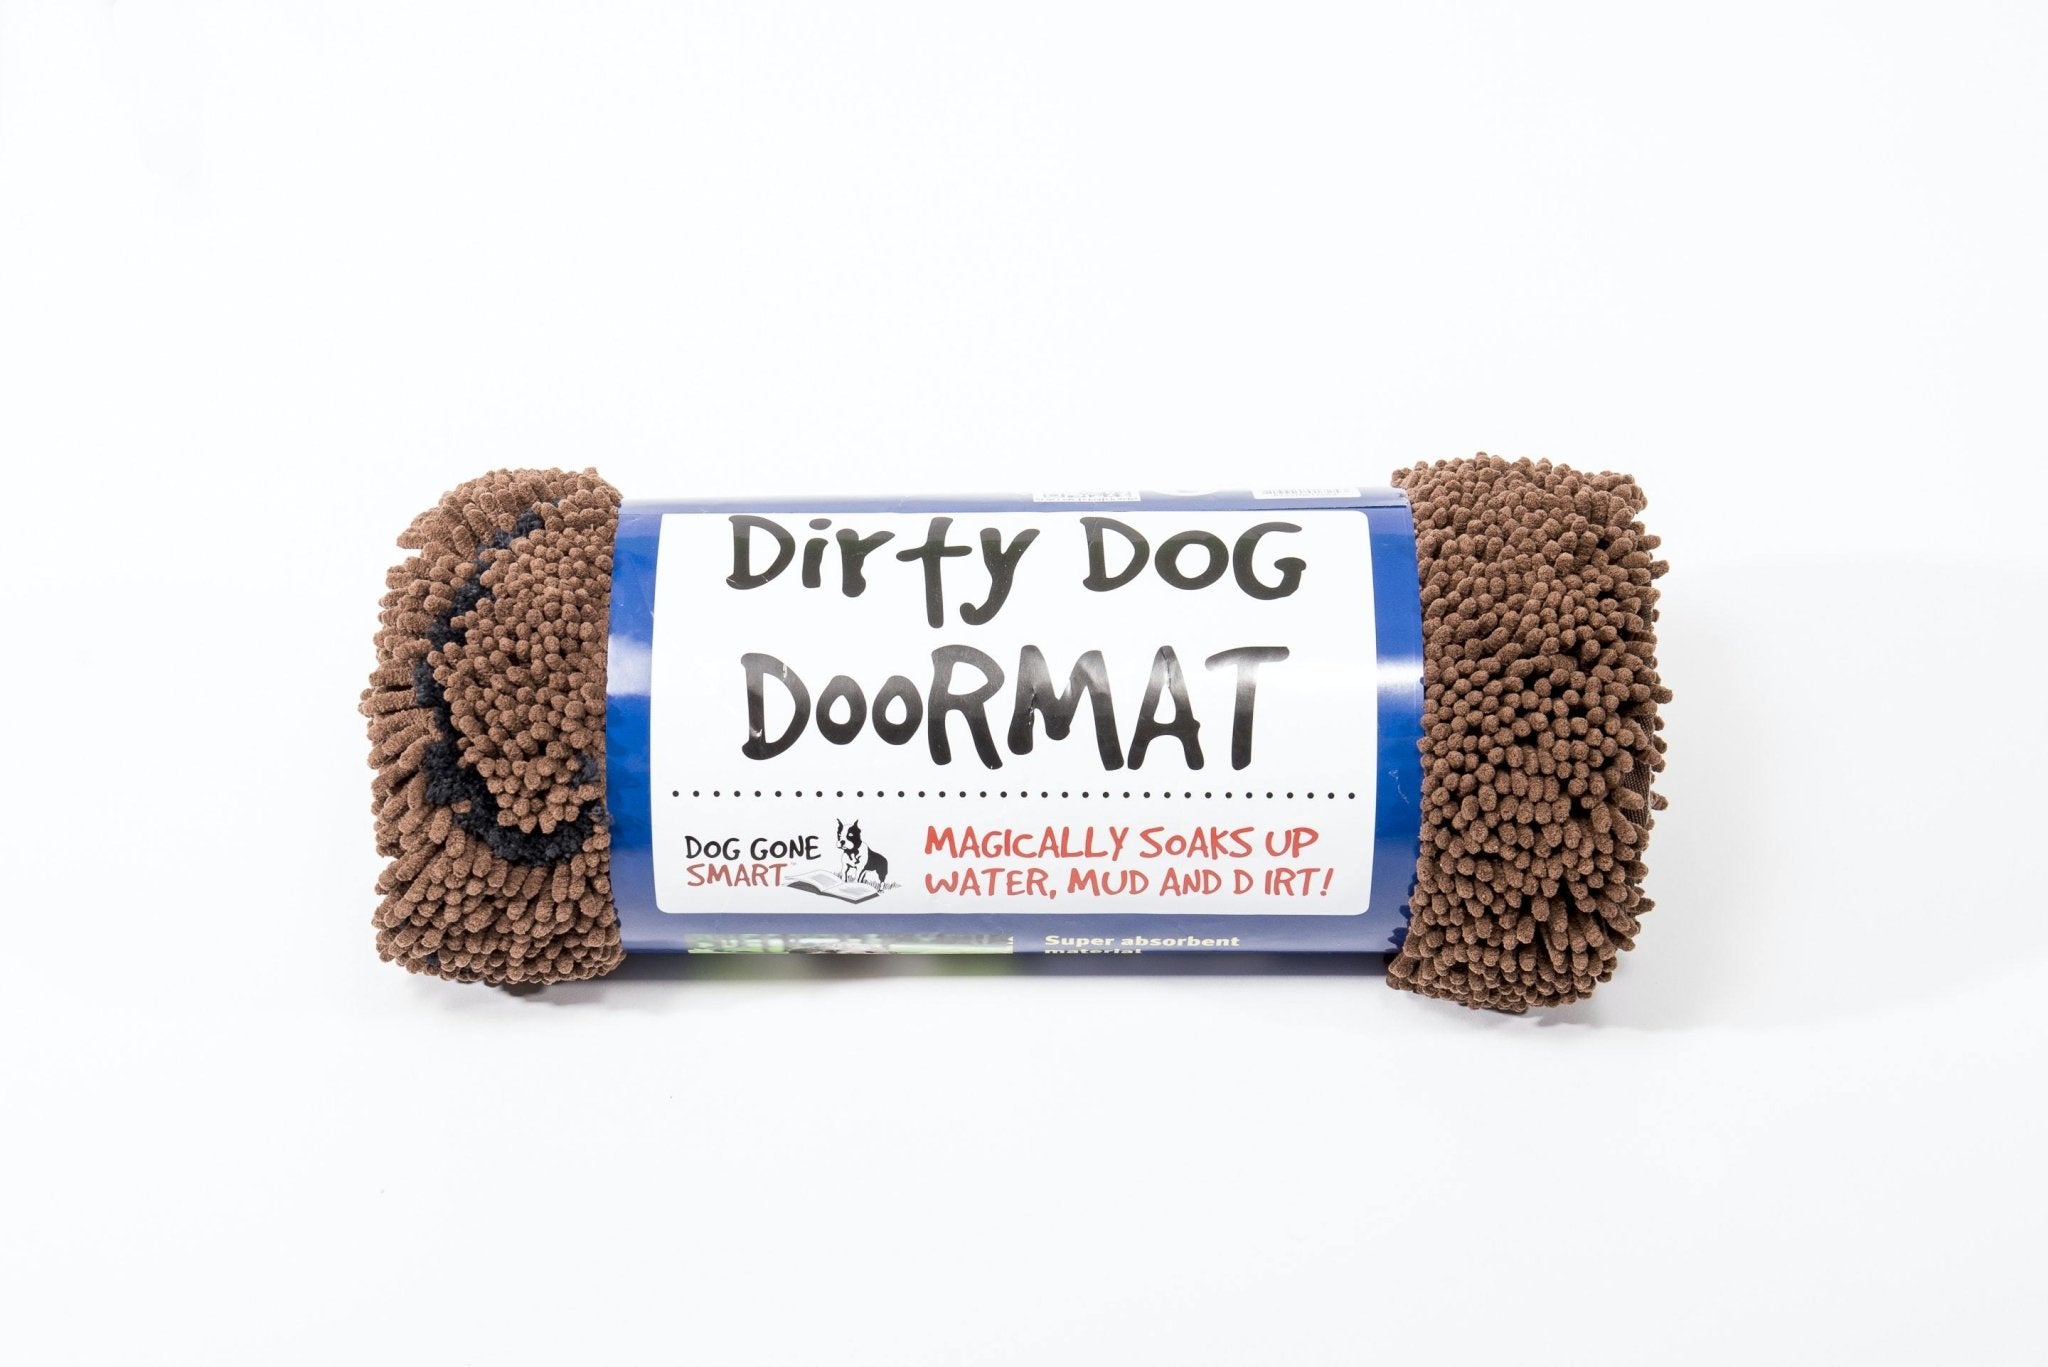  DogBuddy Dog Door Mat, Super Absorbent Dog Mat